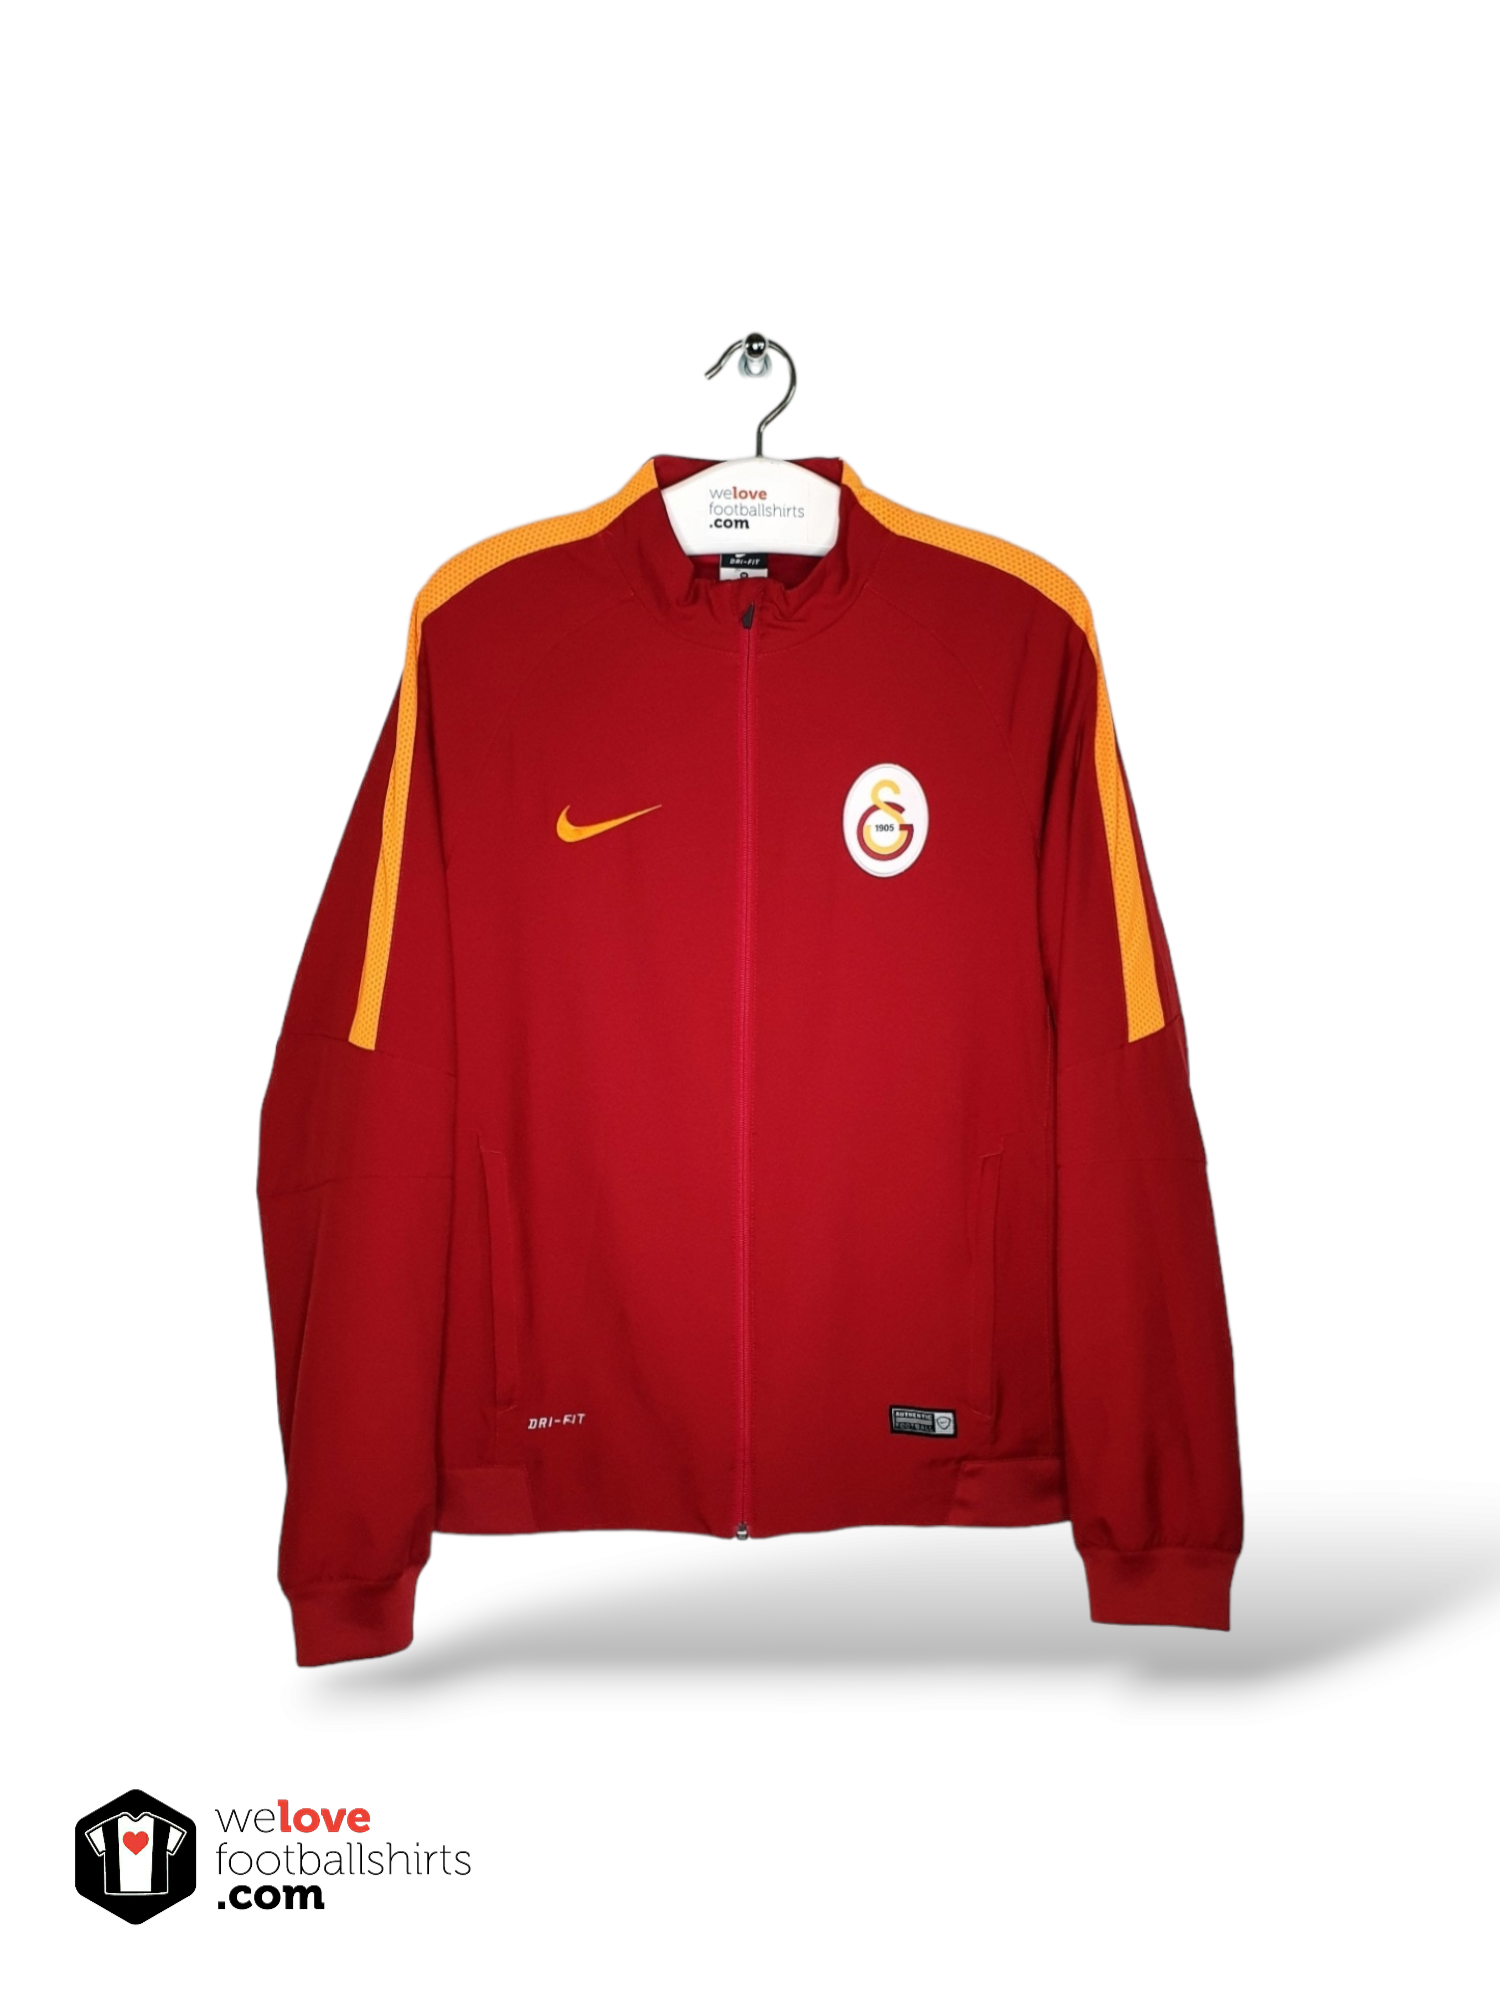 tempo Bijdrage Rentmeester Nike voetbal jacket Galatasaray - Welovefootballshirts.com